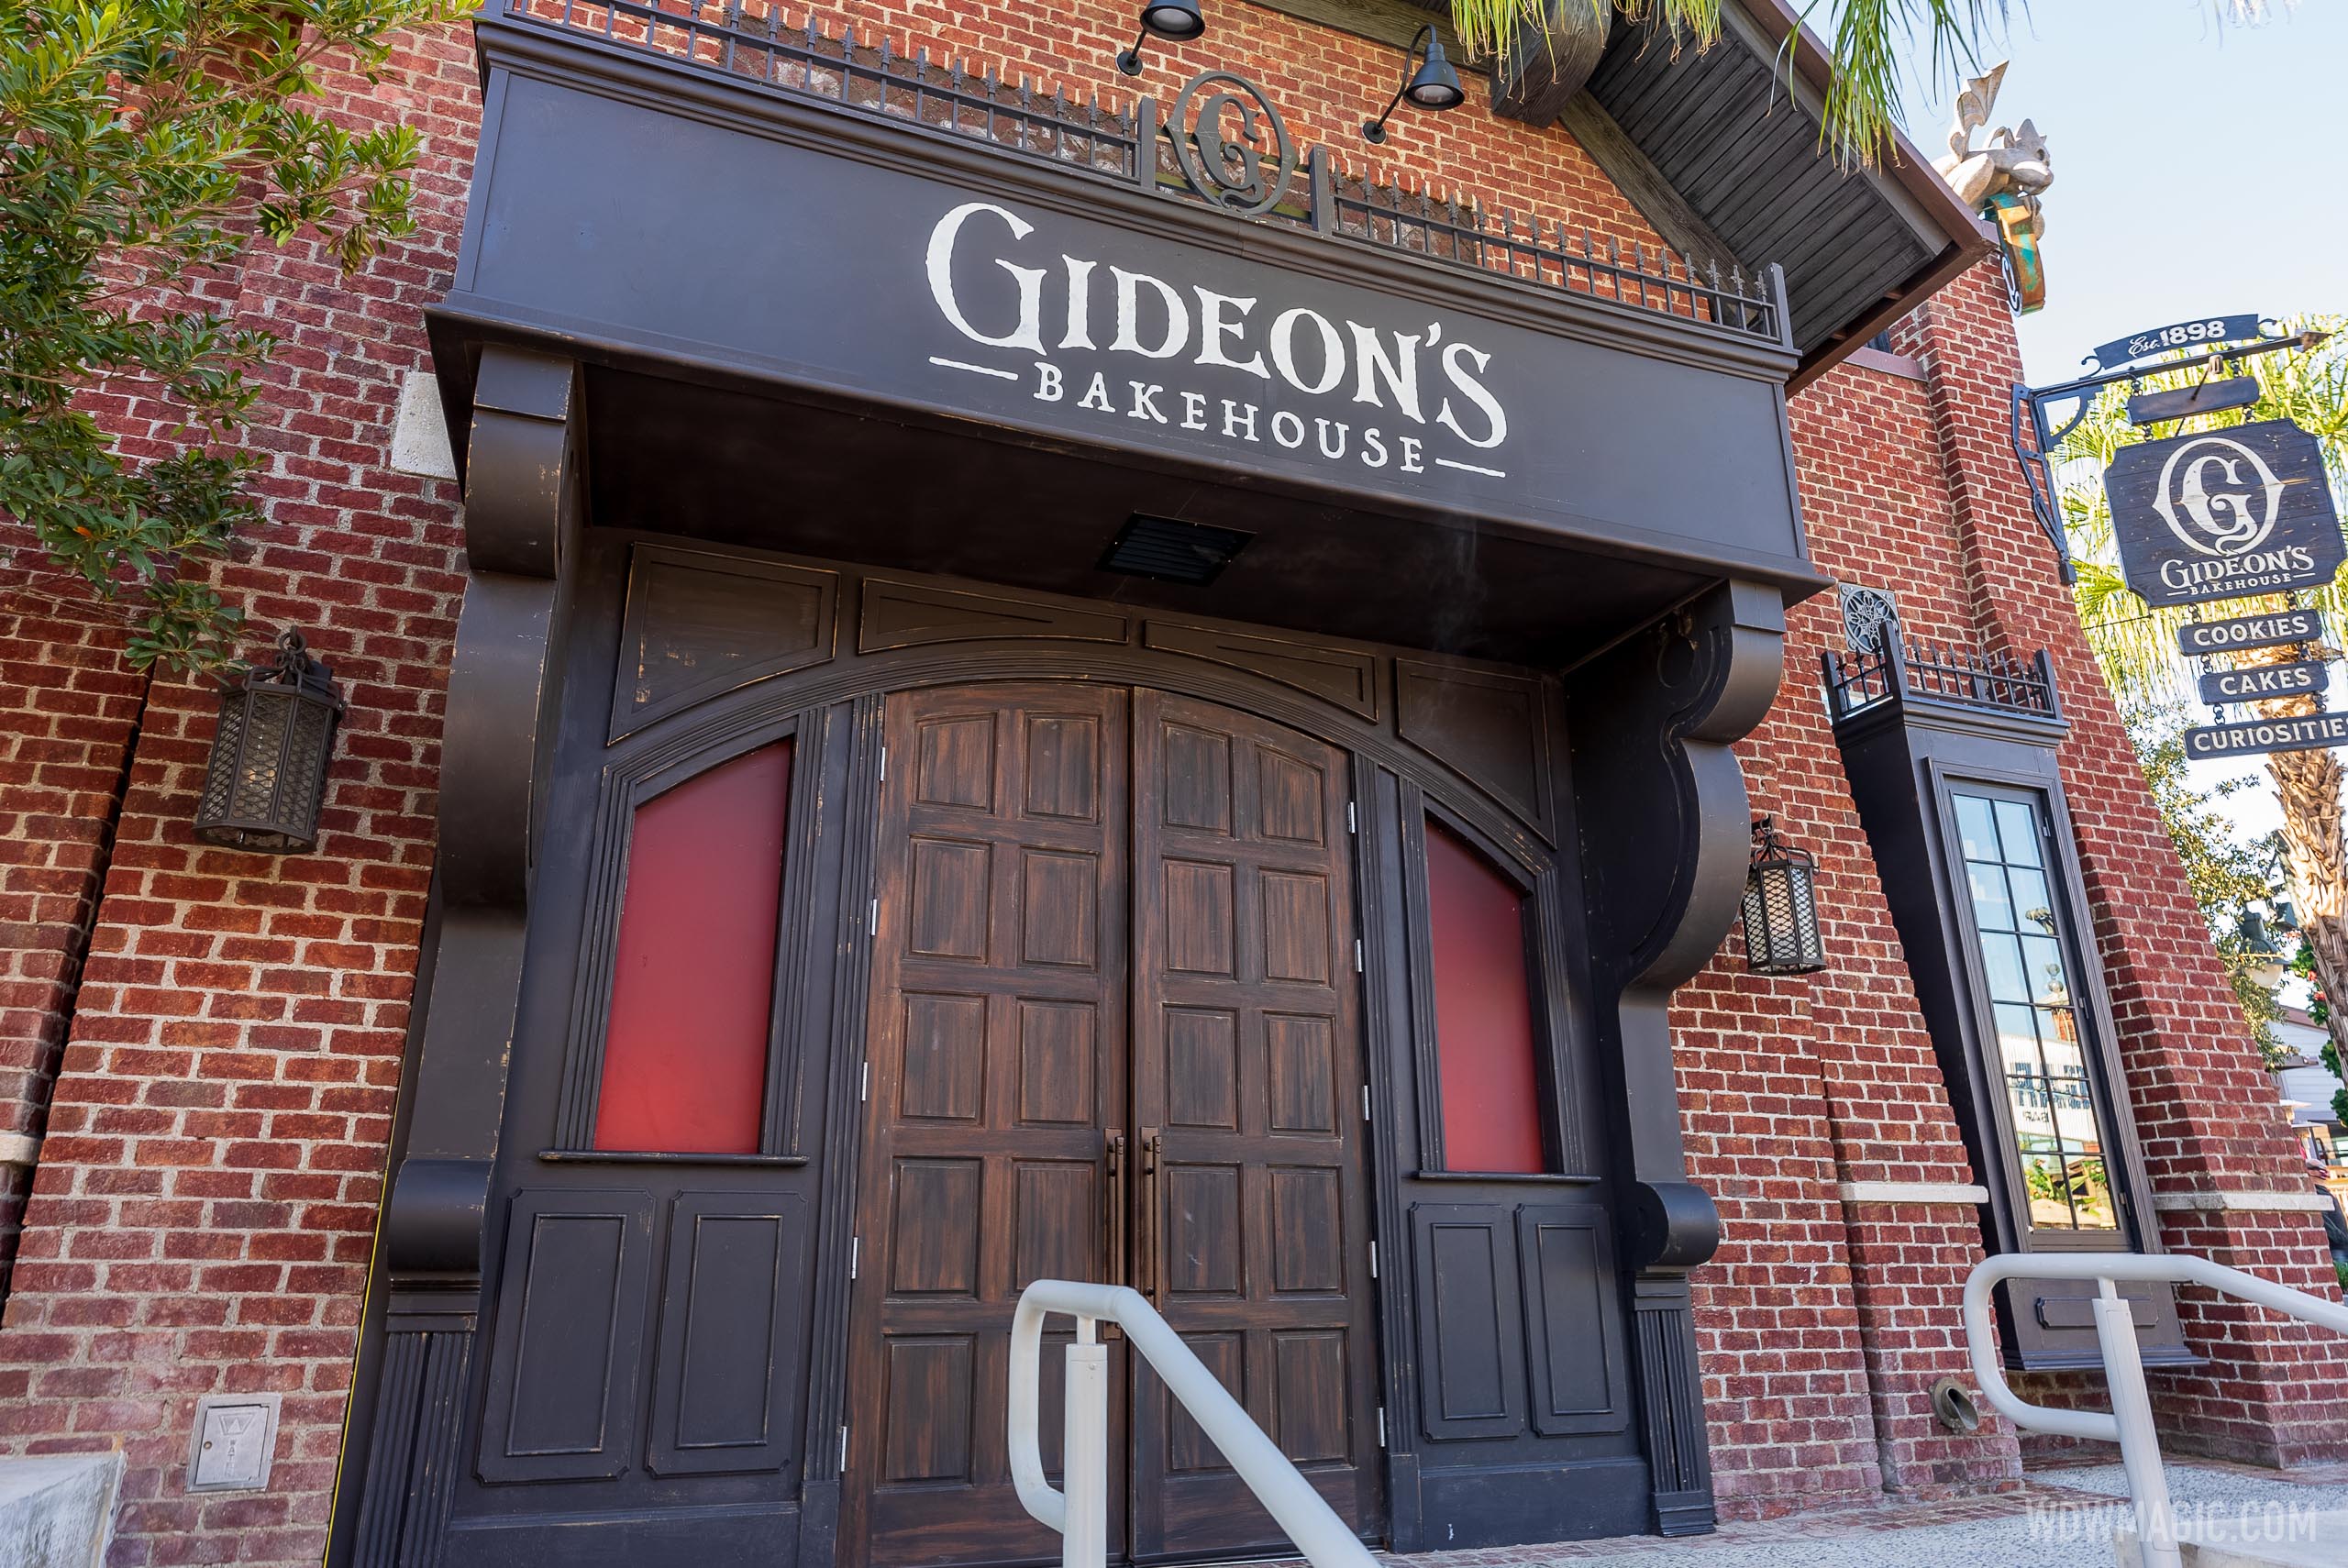 Gideon’s Bakehouse at Disney Springs temporarily closed